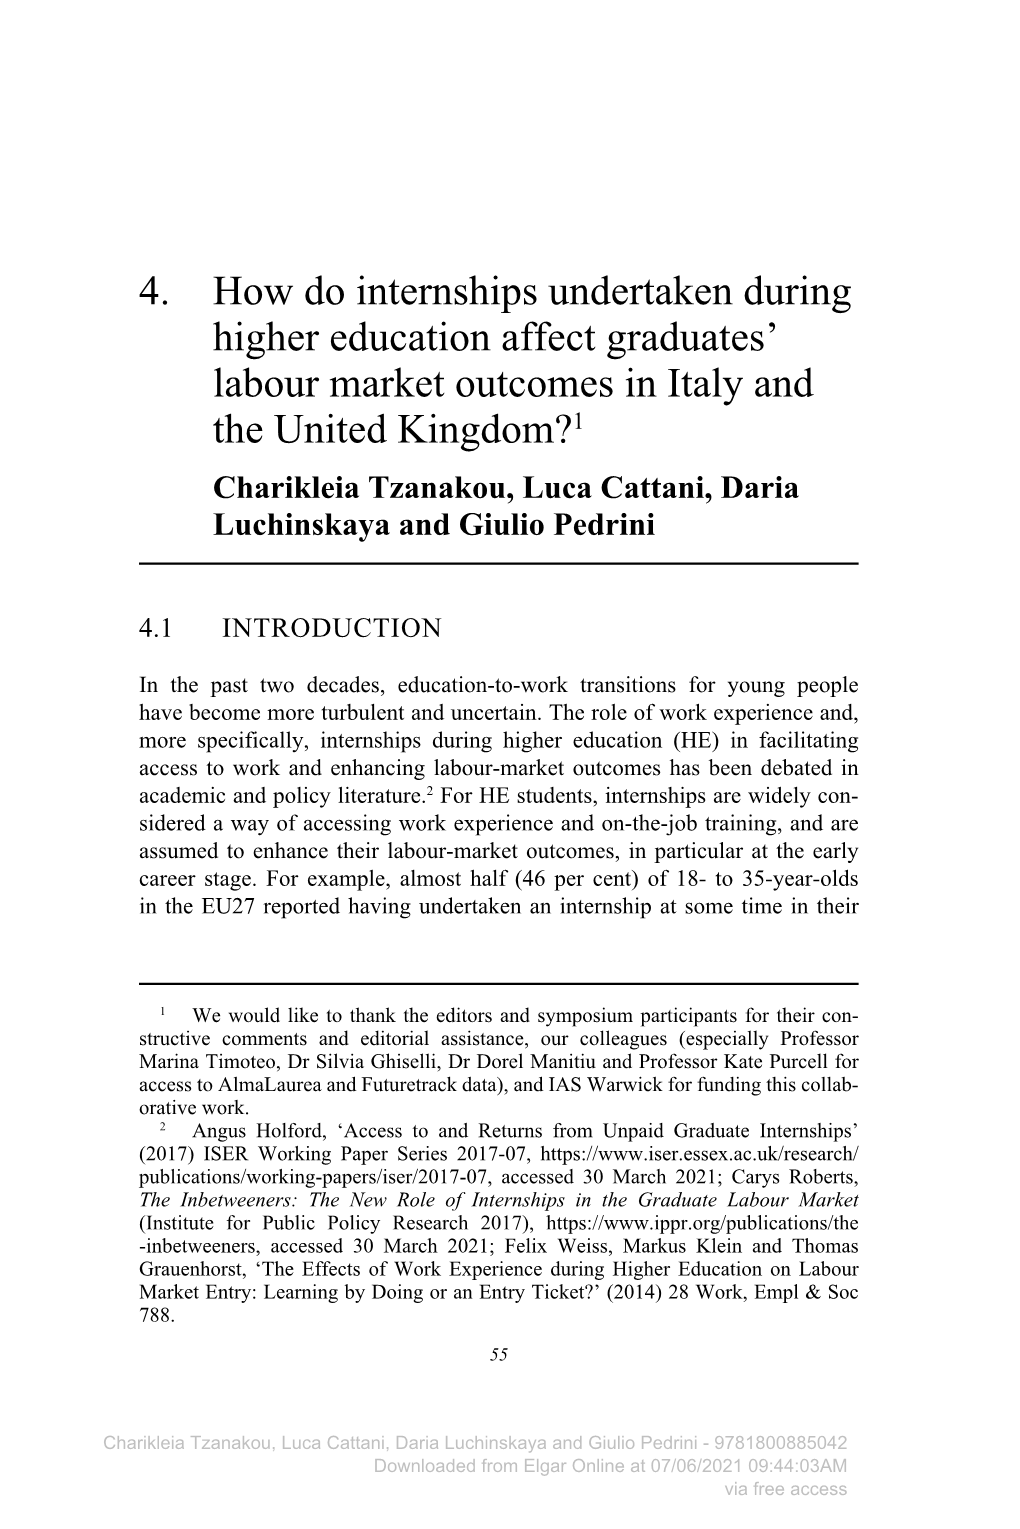 4. How Do Internships Undertaken During Higher Education Affect